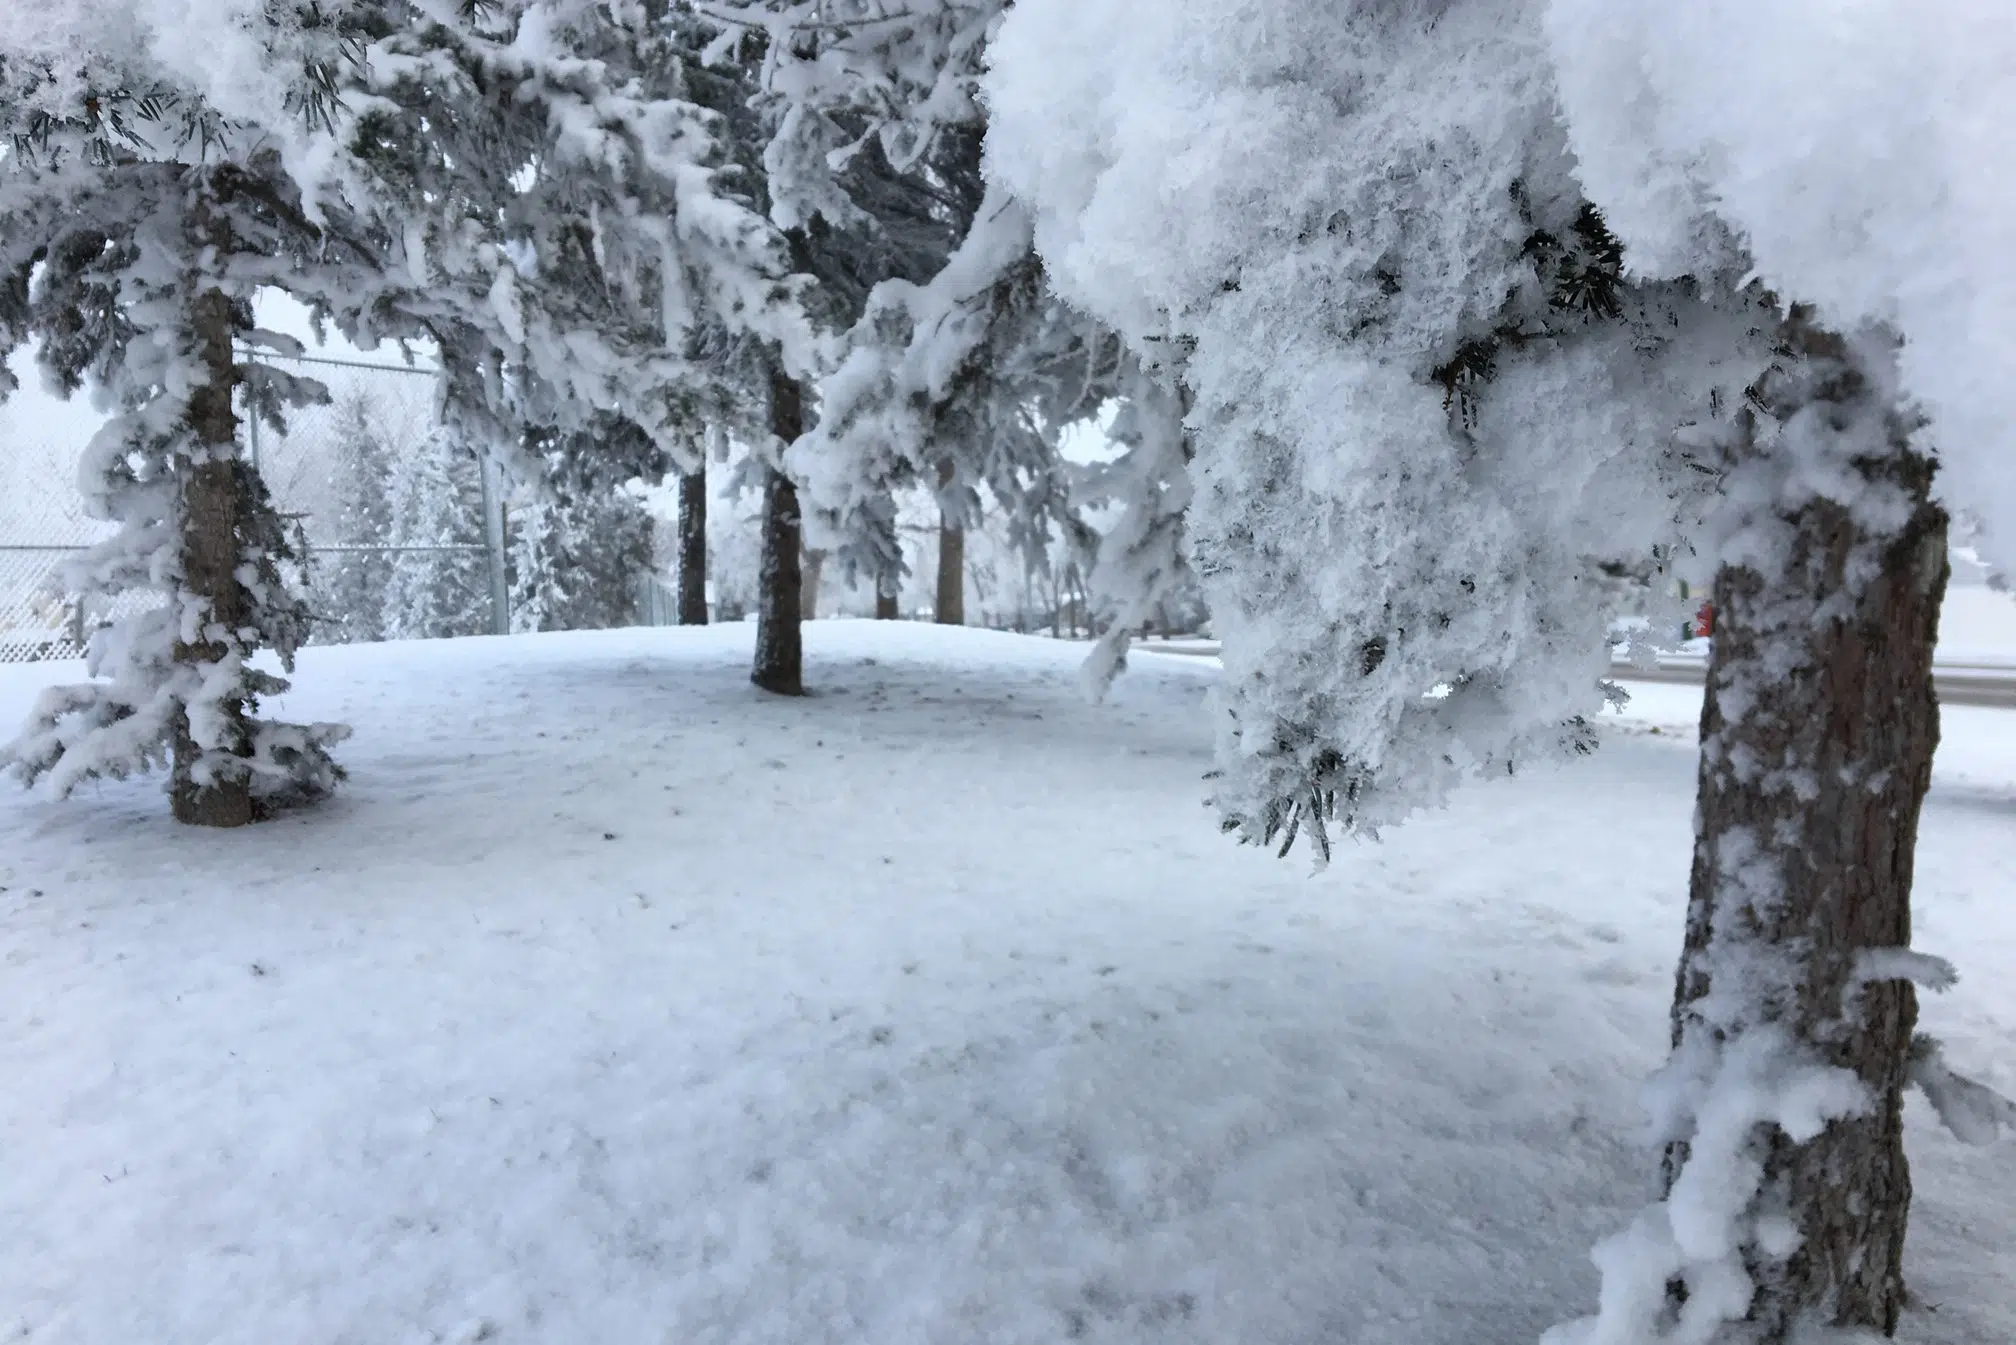 Saskatchewan provincial parks offering winter activities